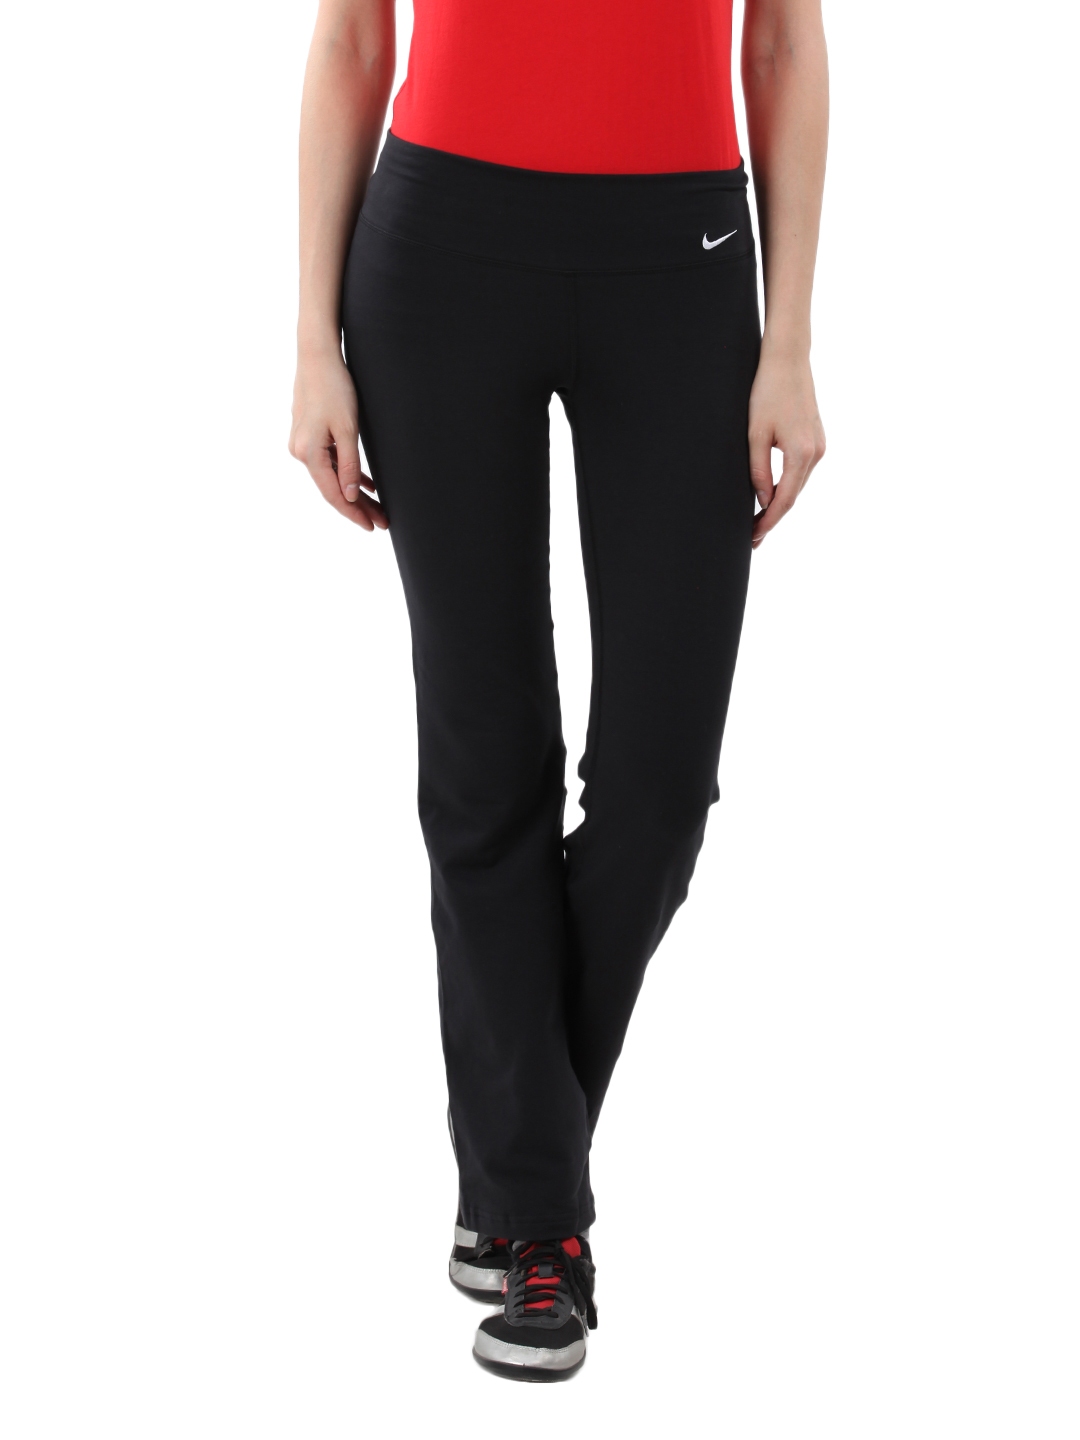 Womens Black Nike Gym Pants Life Style Sports 48 OFF